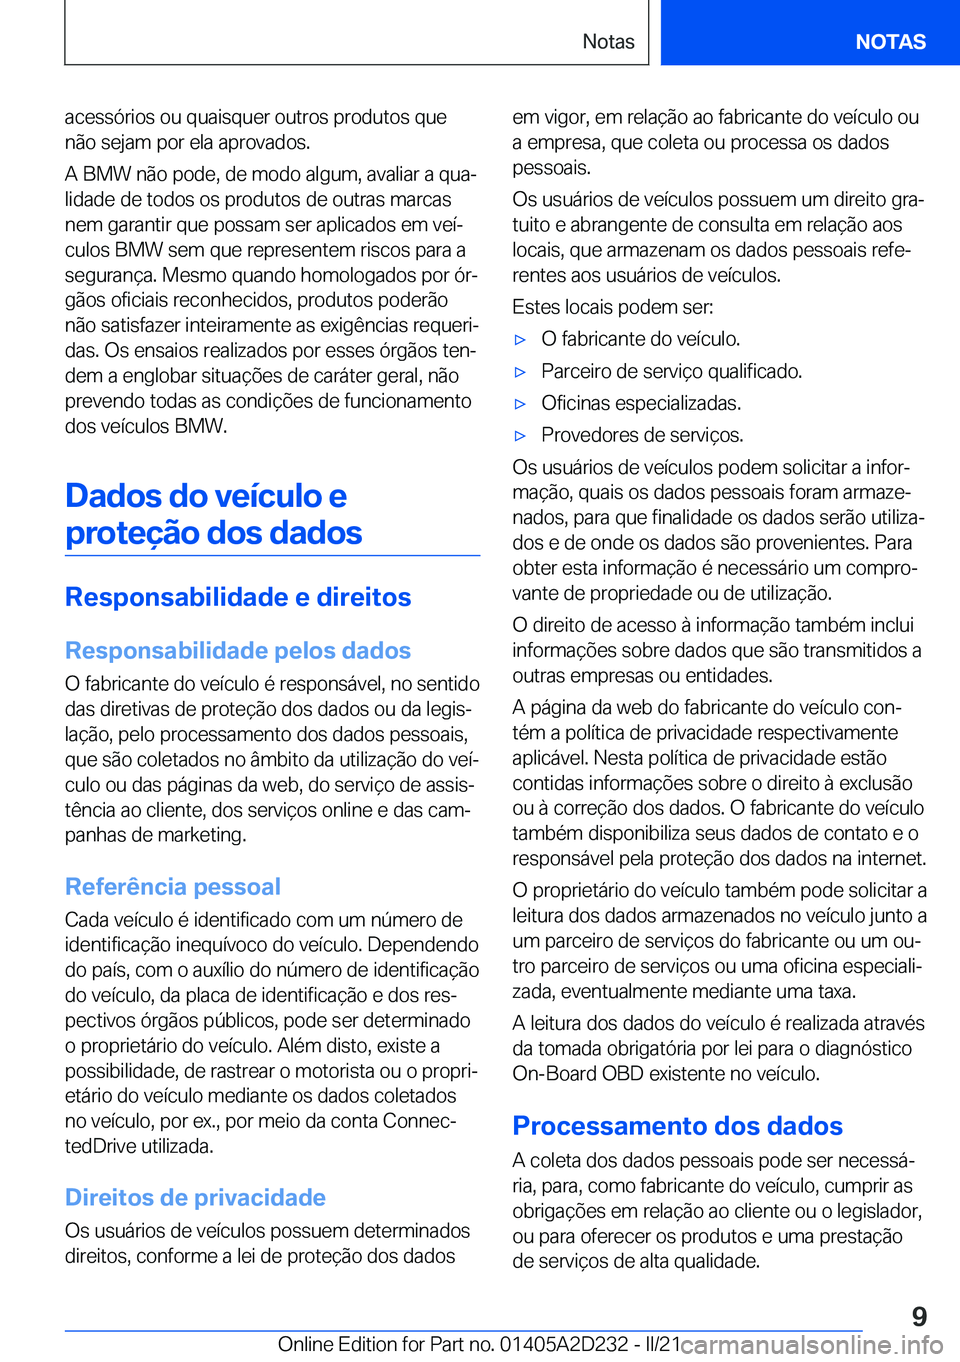 BMW X6 M 2021  Manual do condutor (in Portuguese) �a�c�e�s�s�ó�r�i�o�s��o�u��q�u�a�i�s�q�u�e�r��o�u�t�r�o�s��p�r�o�d�u�t�o�s��q�u�e
�n�ã�o��s�e�j�a�m��p�o�r��e�l�a��a�p�r�o�v�a�d�o�s�.
�A��B�M�W��n�ã�o��p�o�d�e�,��d�e��m�o�d�o��a�l�